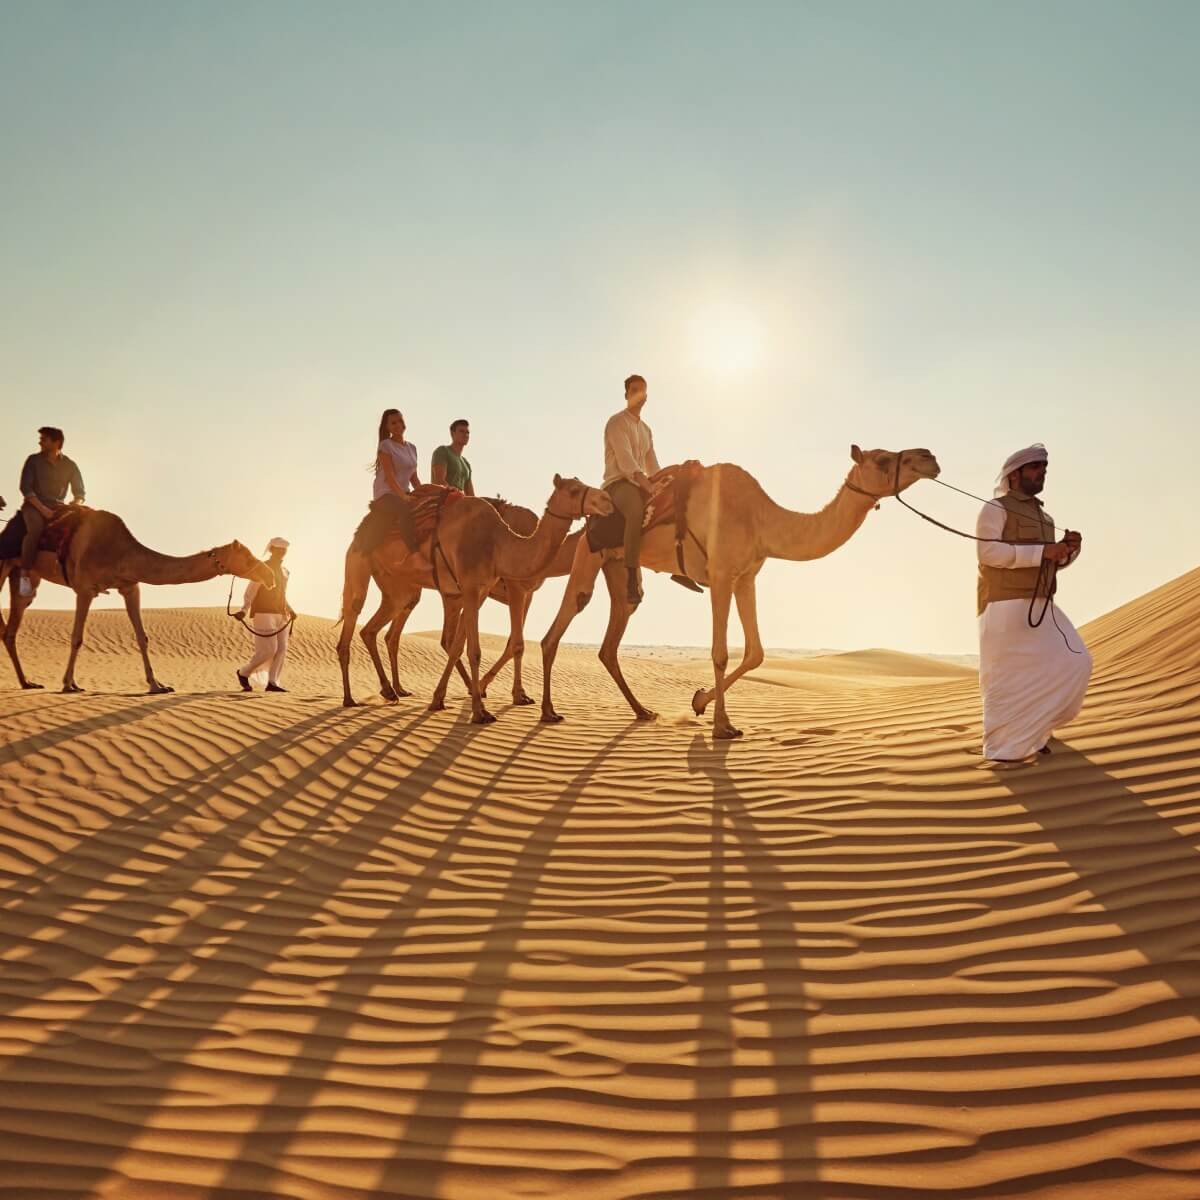 Фото в Дубае люди в пустыне